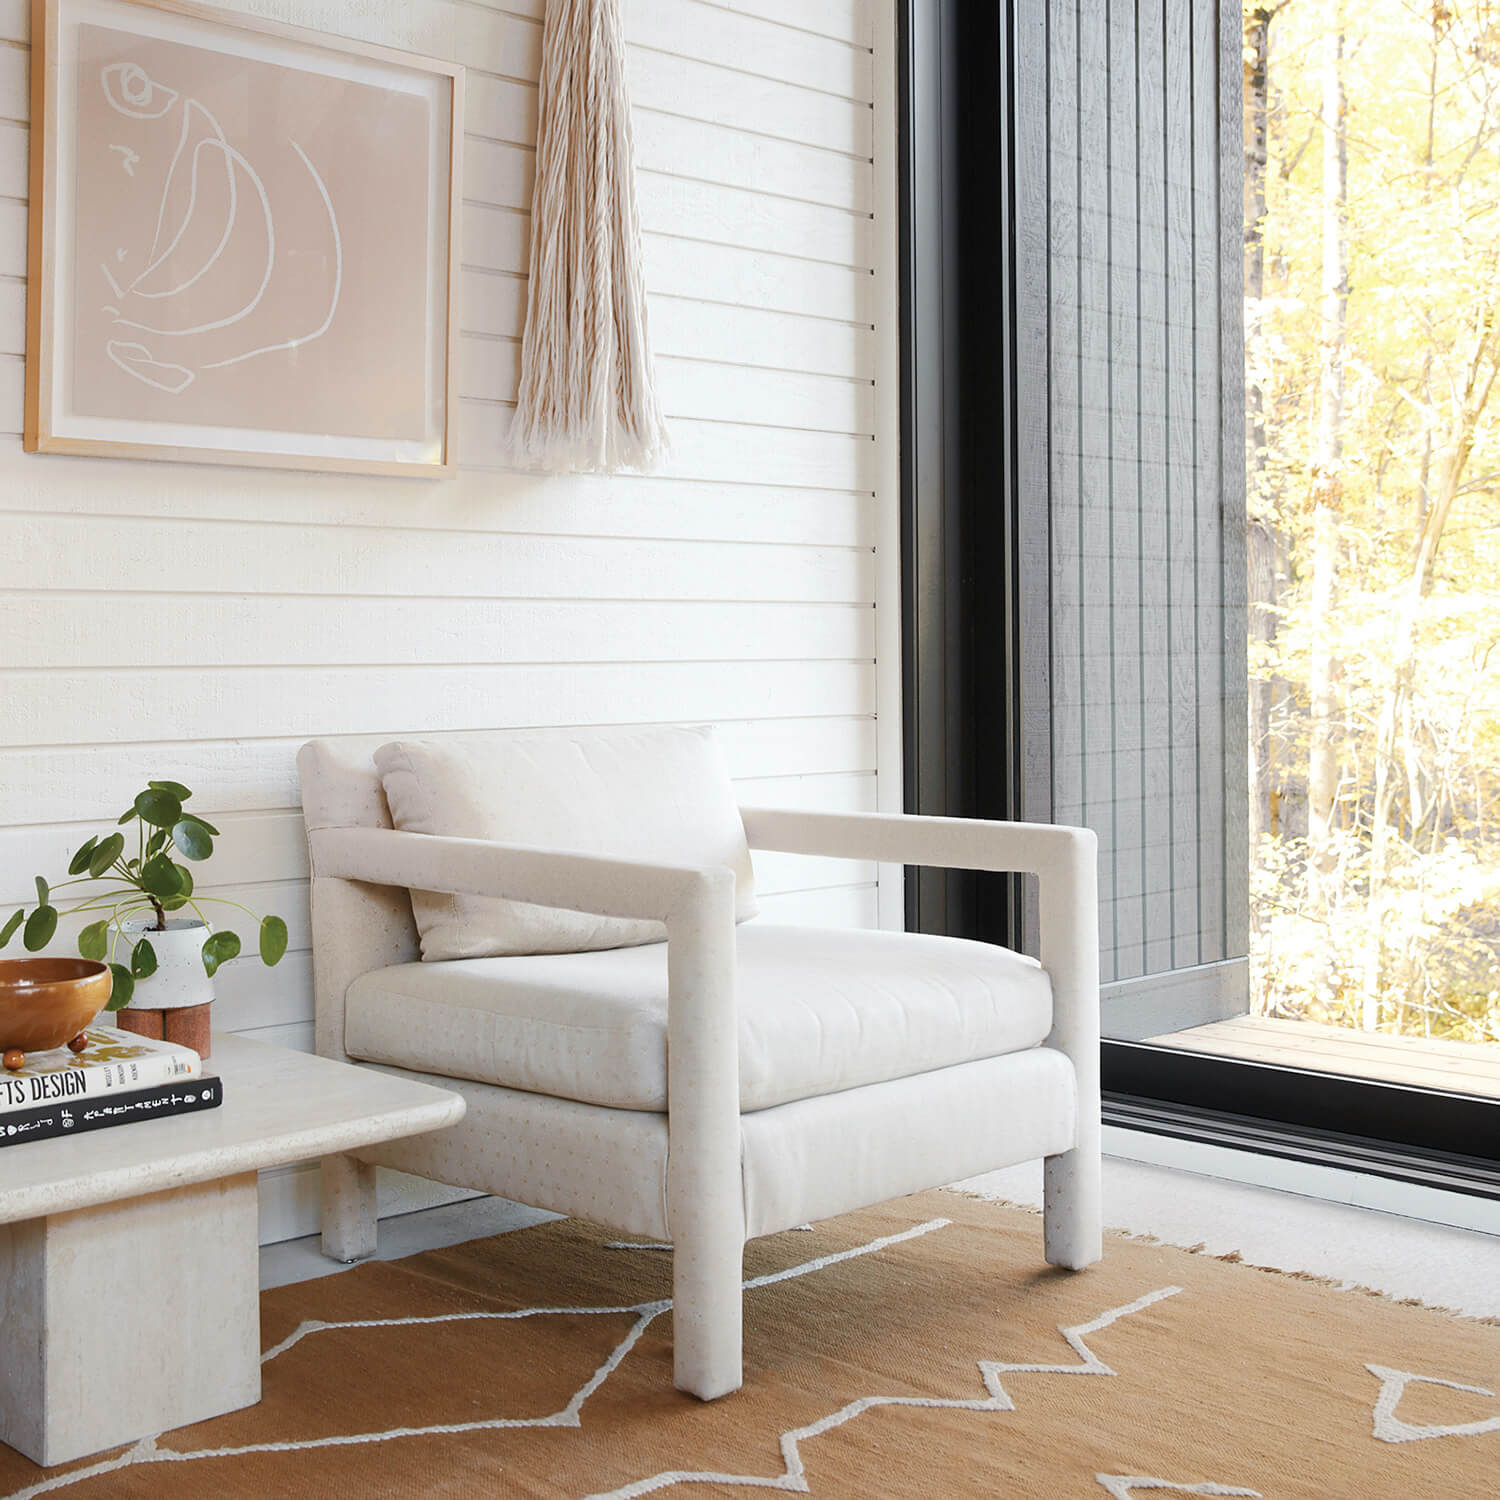 A cozy spot near a window in Sarah Sherman Samuel’s modern home office space.